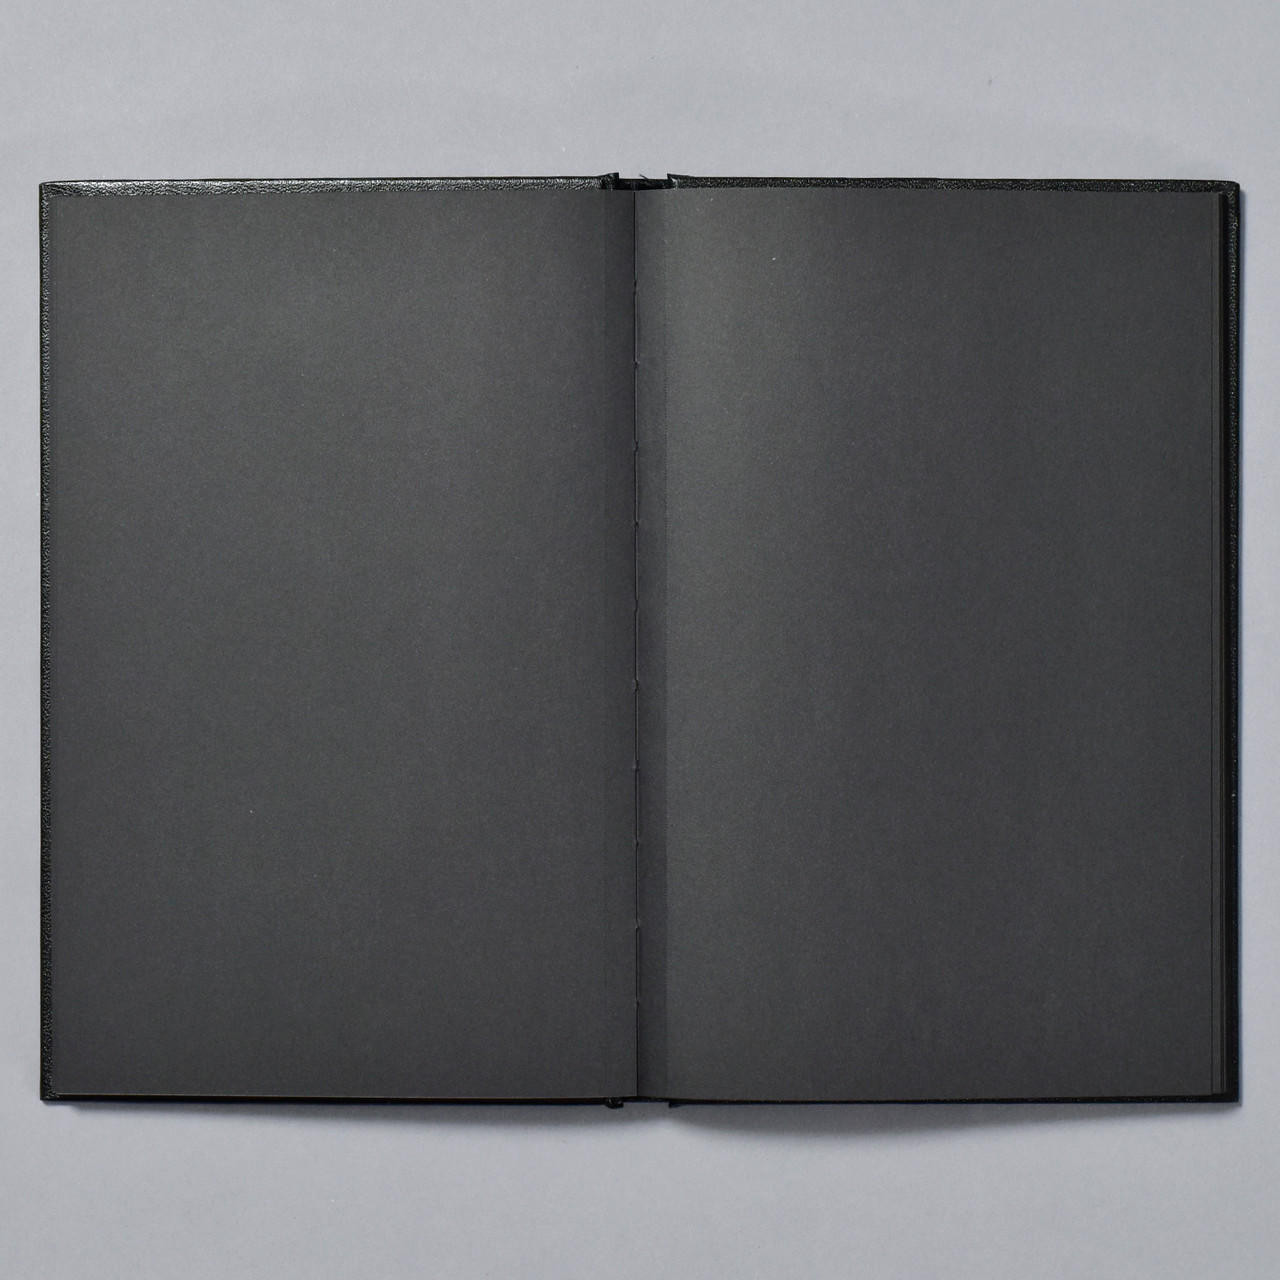 8x10.5 Black Paper Sketchbook - Where'd You Get That!?, Inc.